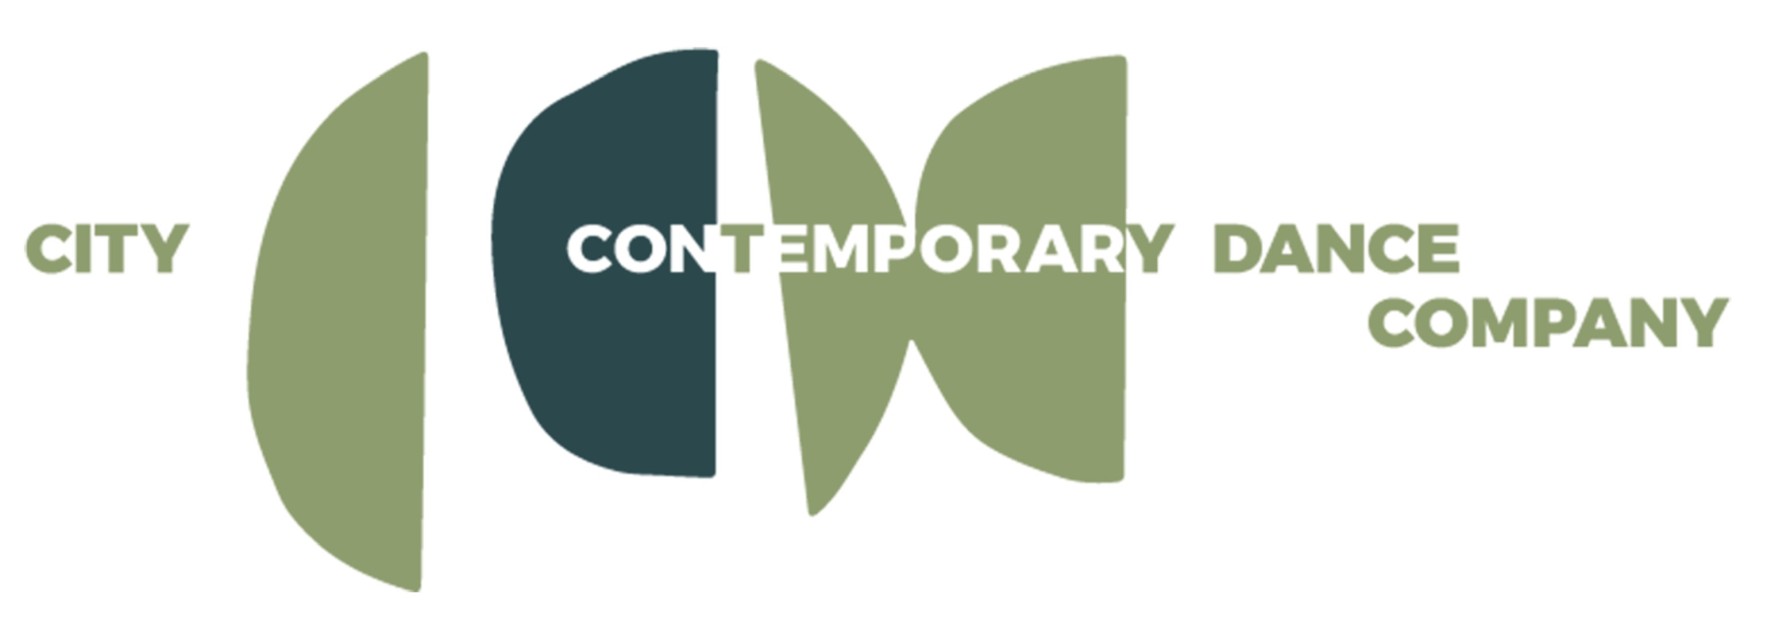 City Contemporary Dance Company